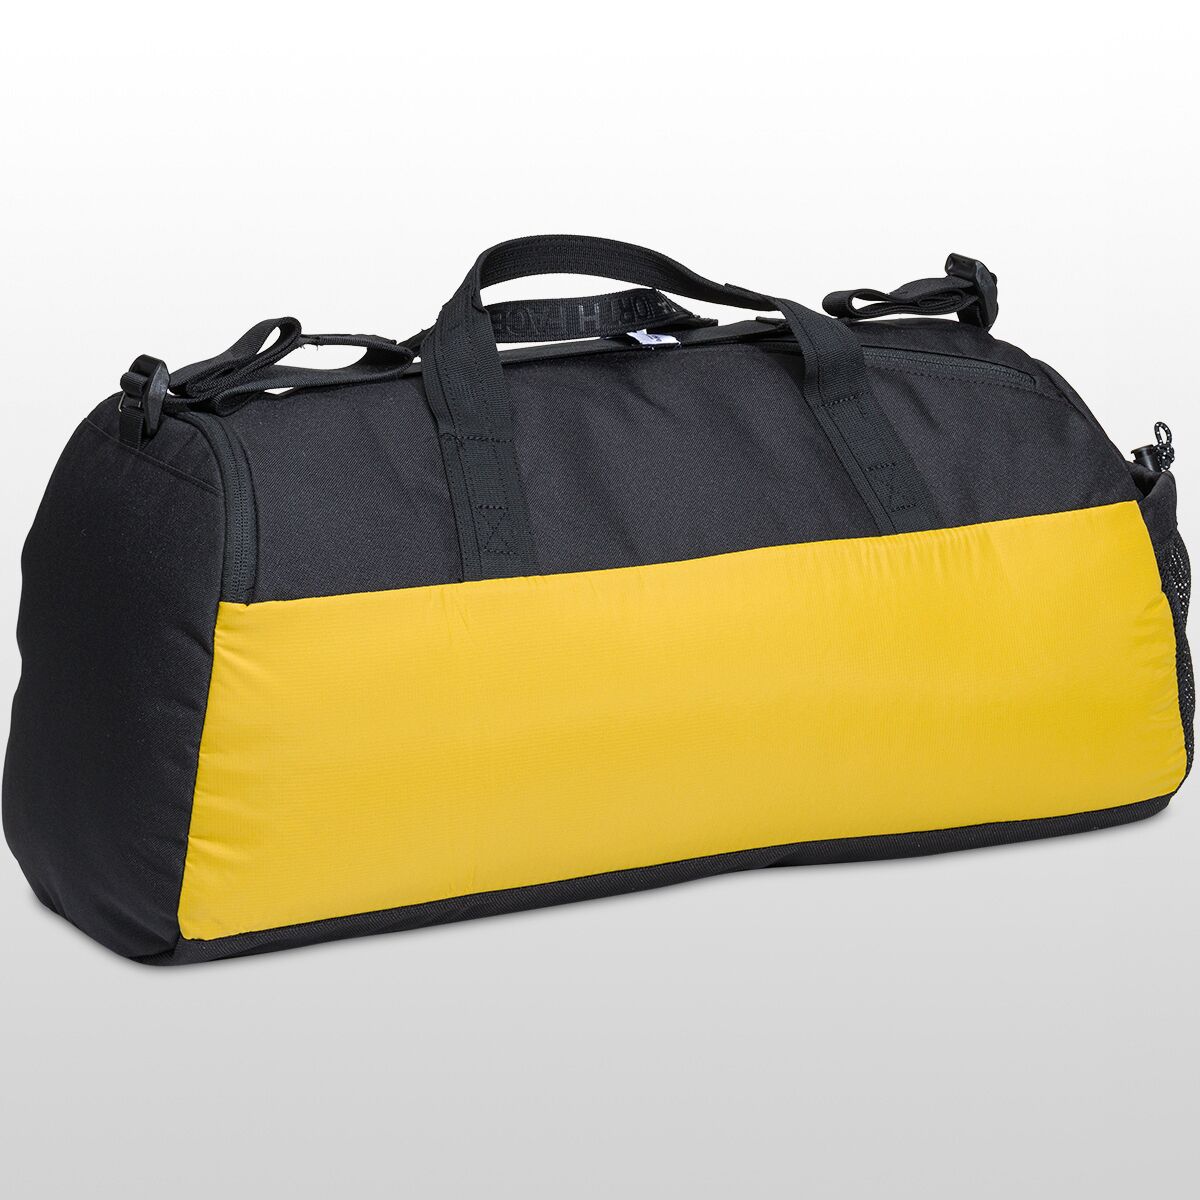 The North Face Bozer Duffel Bag - Accessories